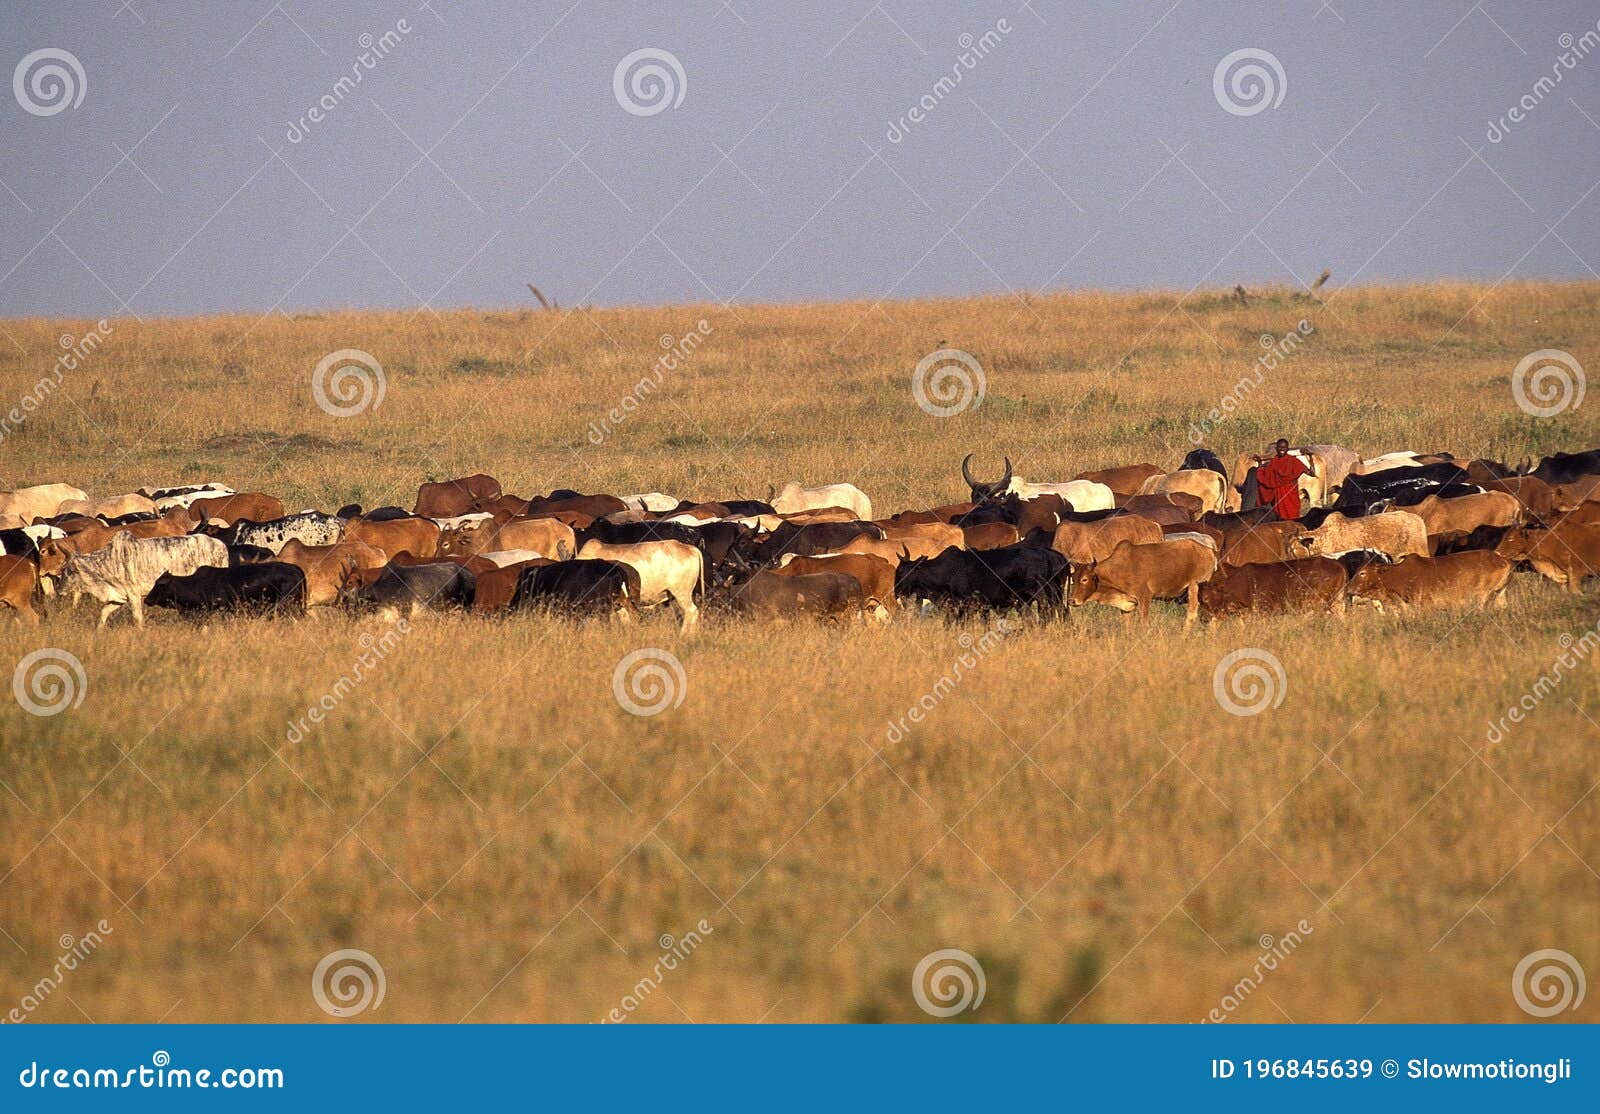 cattle with masai gardian, masai mara park in kenya